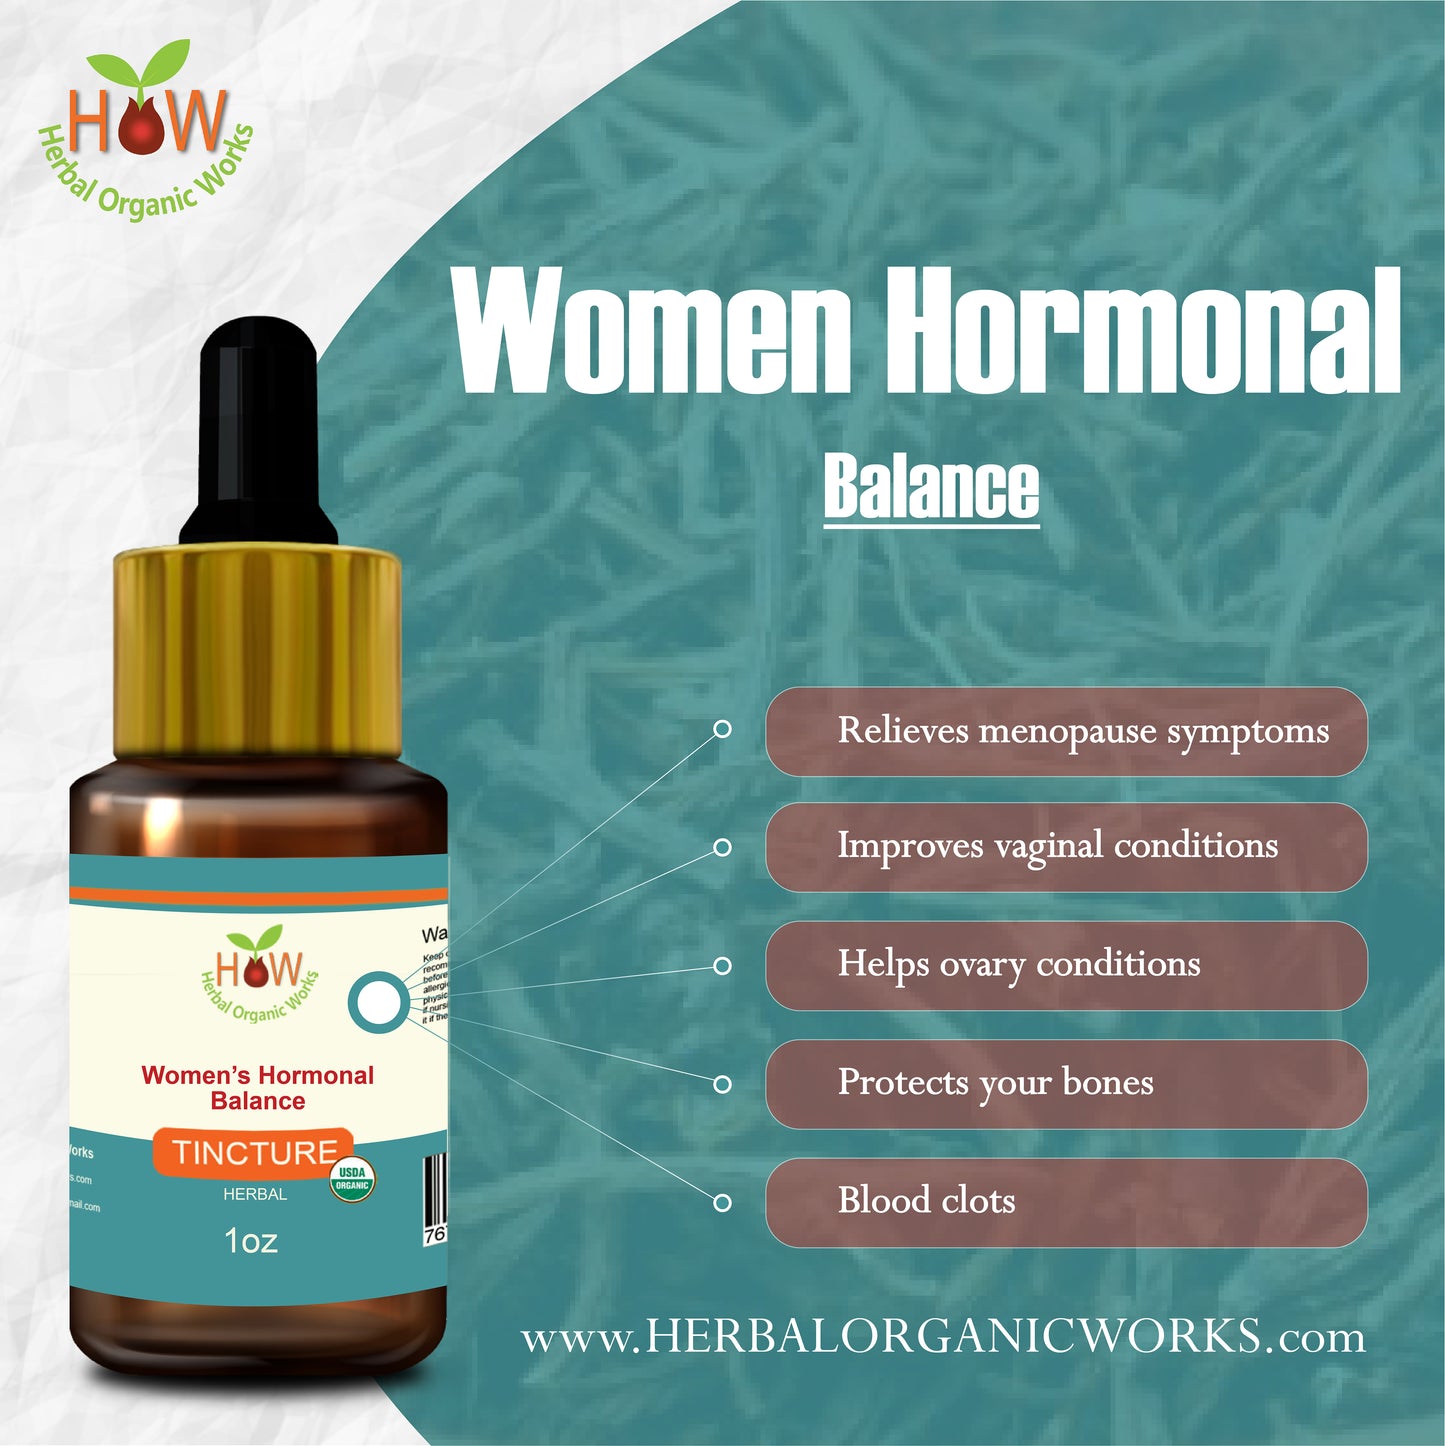 Women's Hormonal Balance